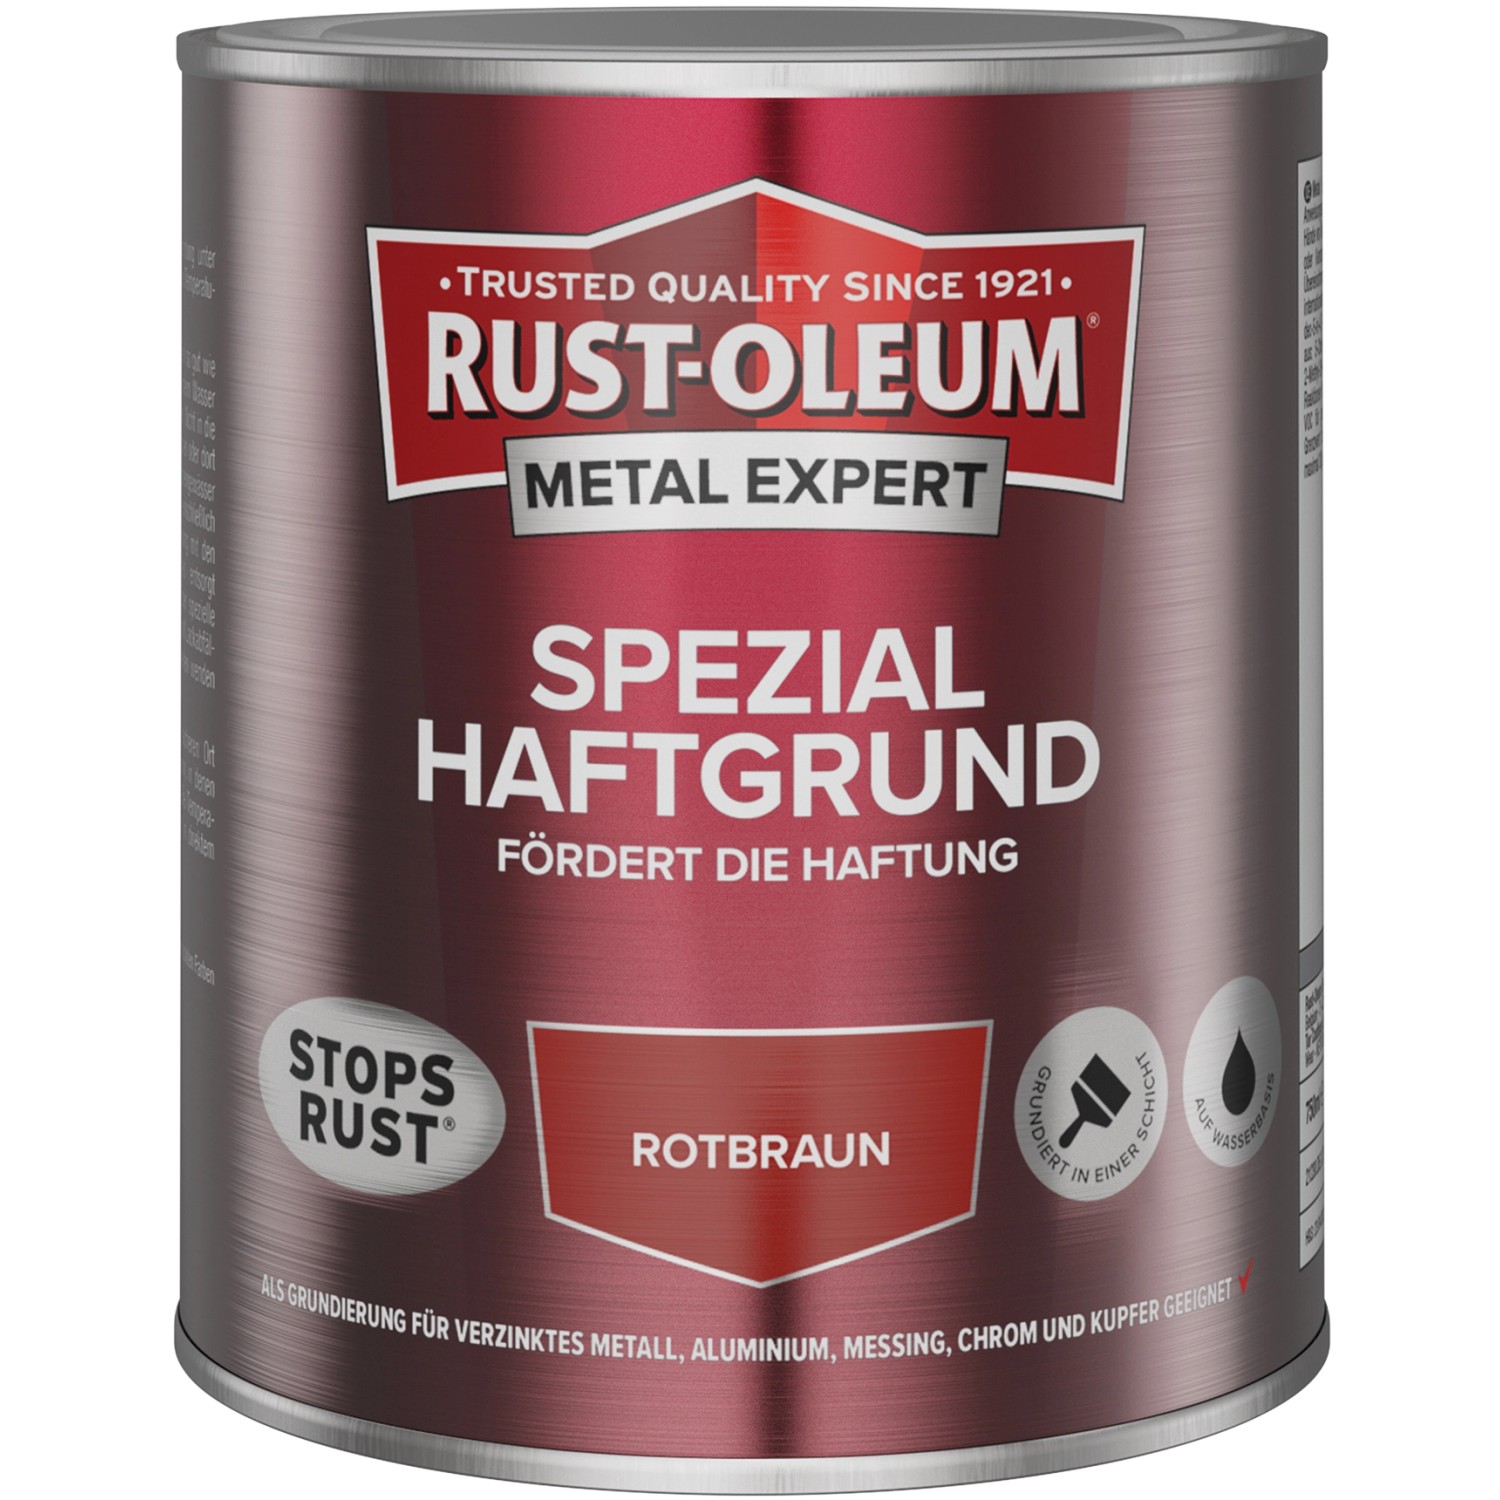 Rust-Oleum Metal Expert Spezialhaftgrund Rotbraun 750 ml von Rust-Oleum